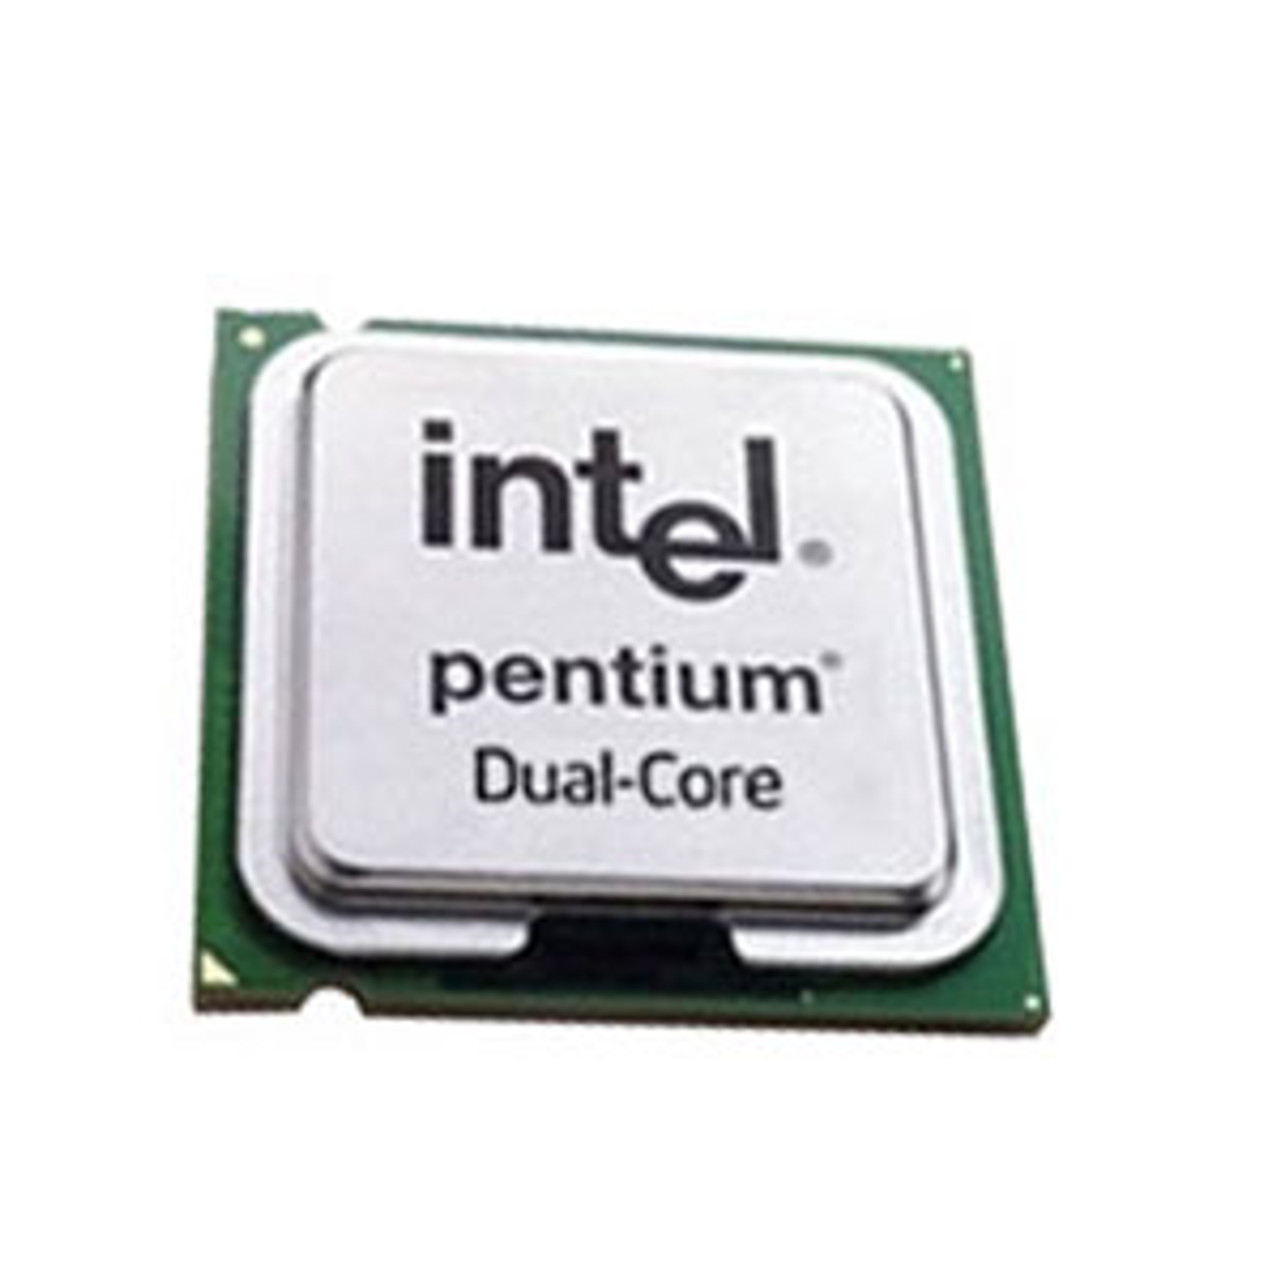 SLGTL - Intel PENTIUM Dual Core E5300 2.6GHz 2MB L2 Cache 800MHz FSB Socket LGA-775 45NM 65W Desktop Processor